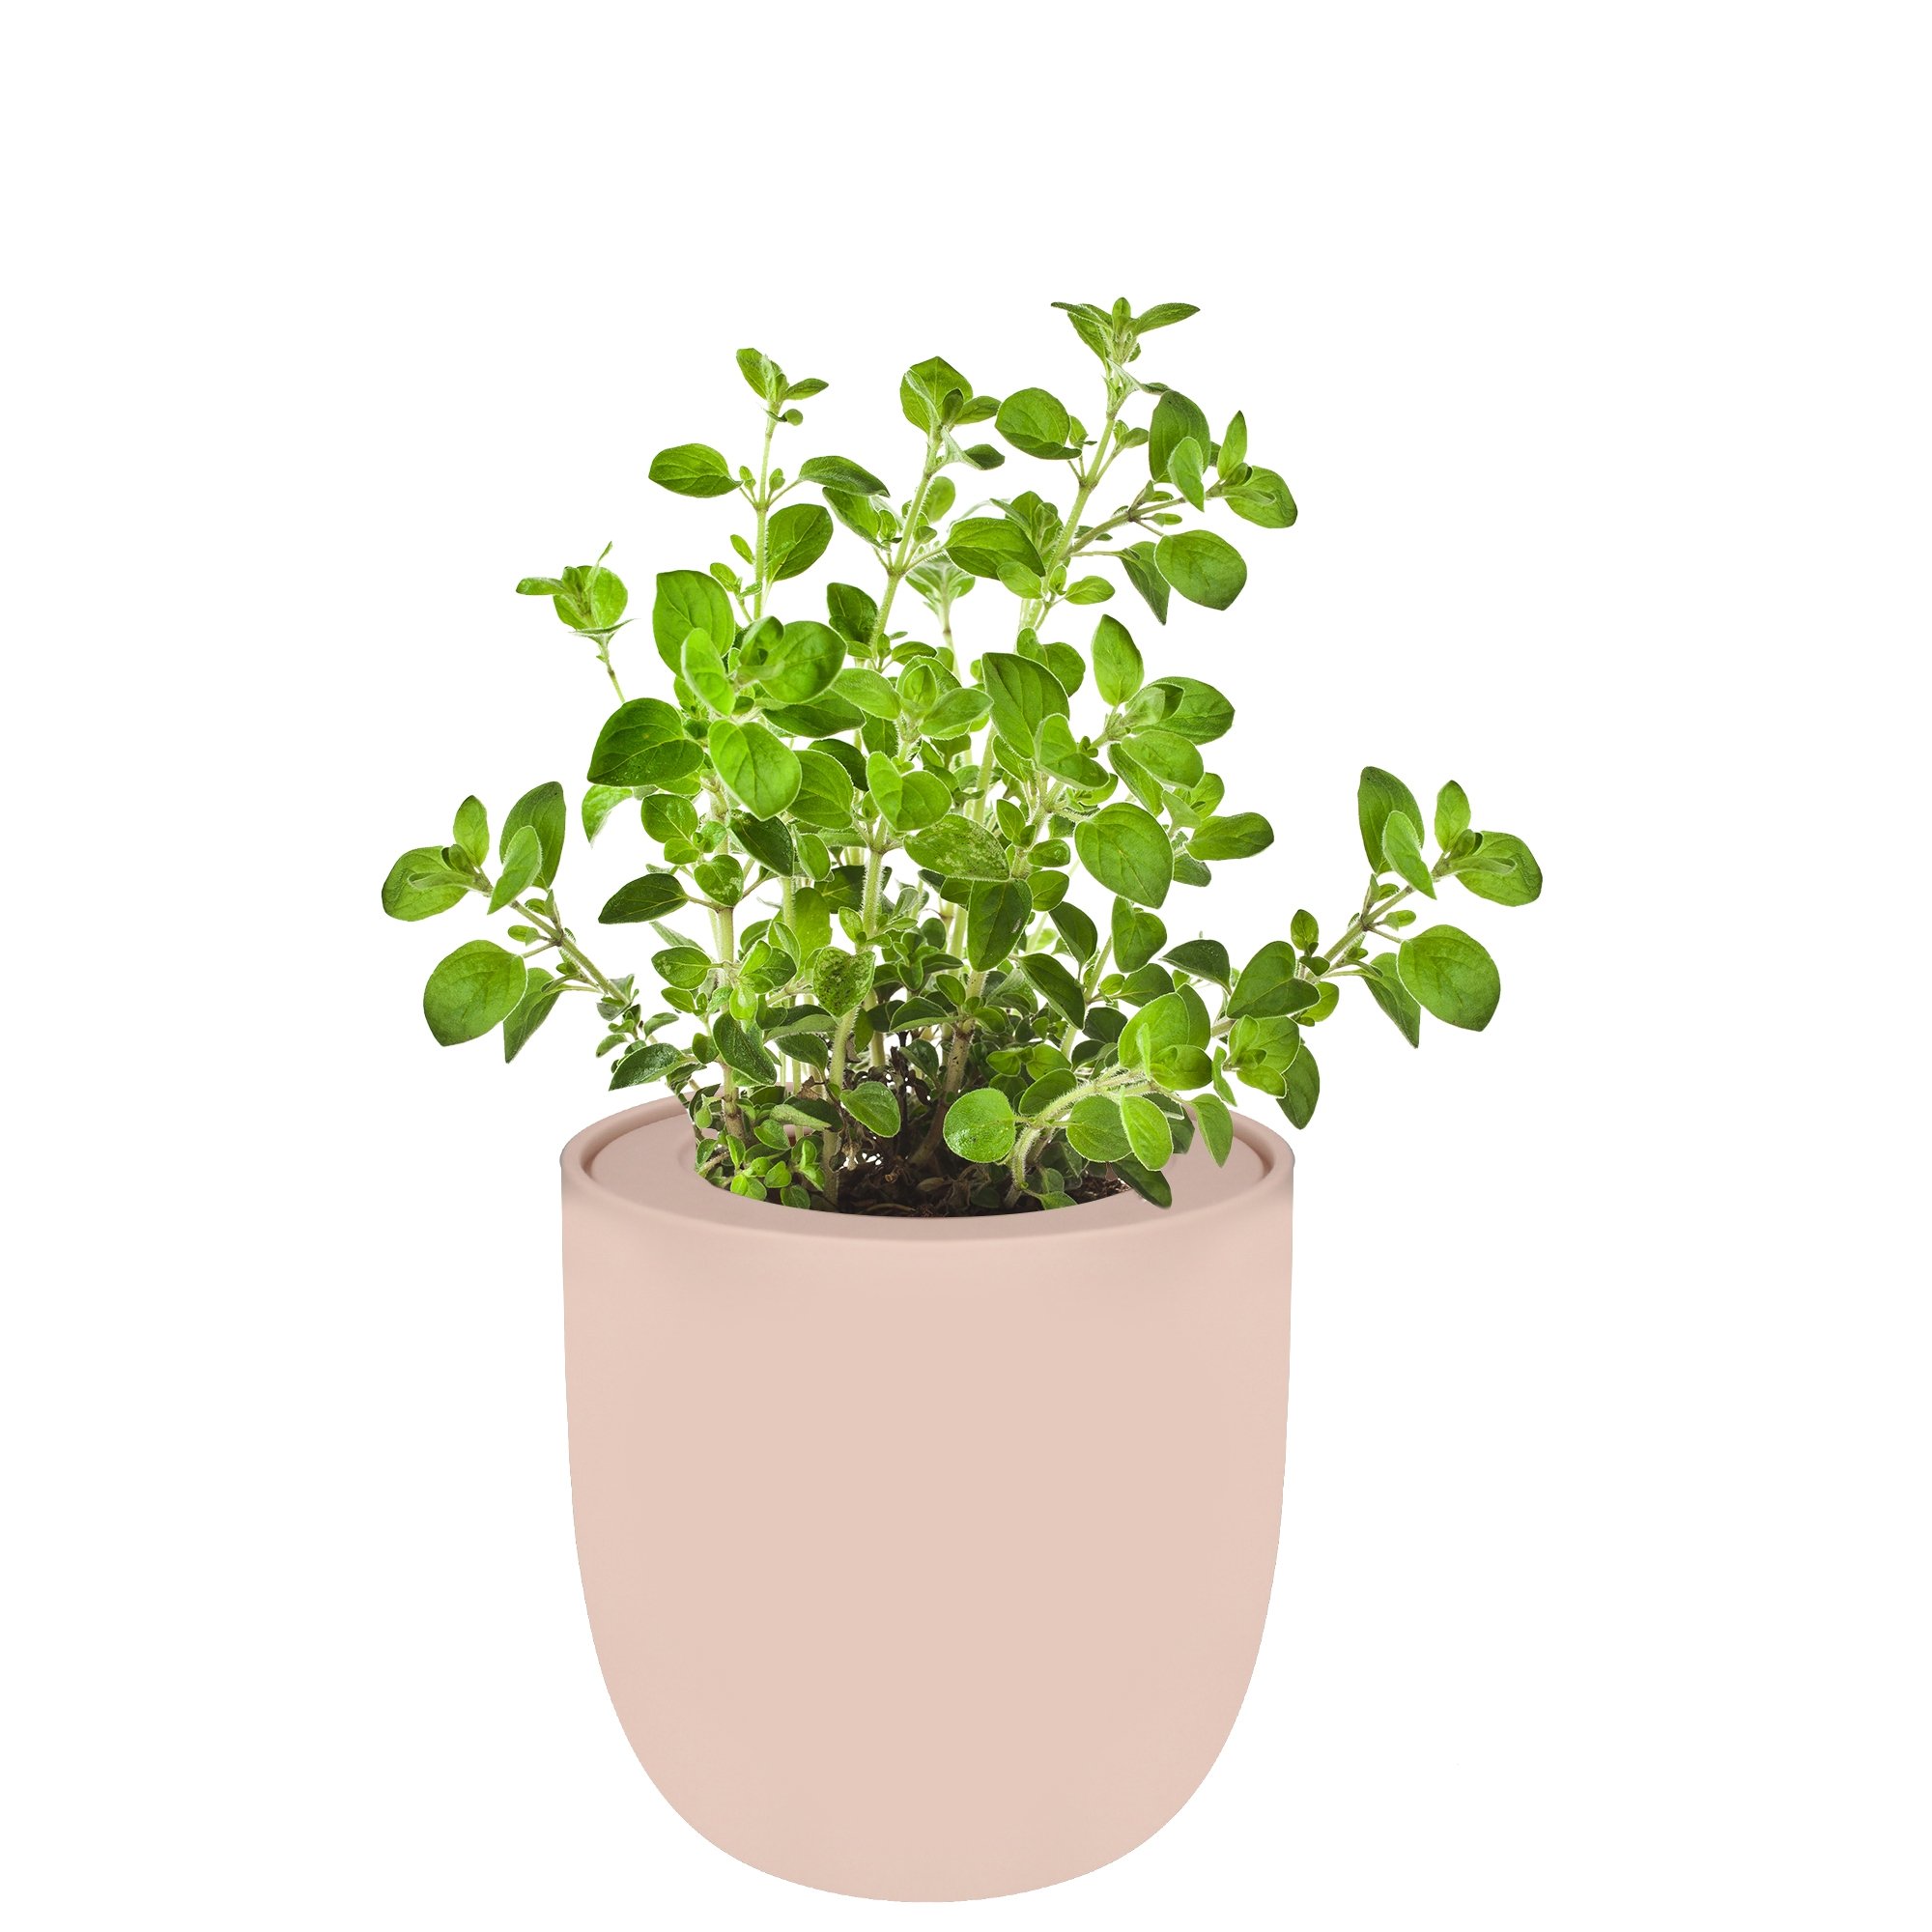 Oregano Pink Ceramic Pot Hydroponic Growing Kit with Organic Seeds